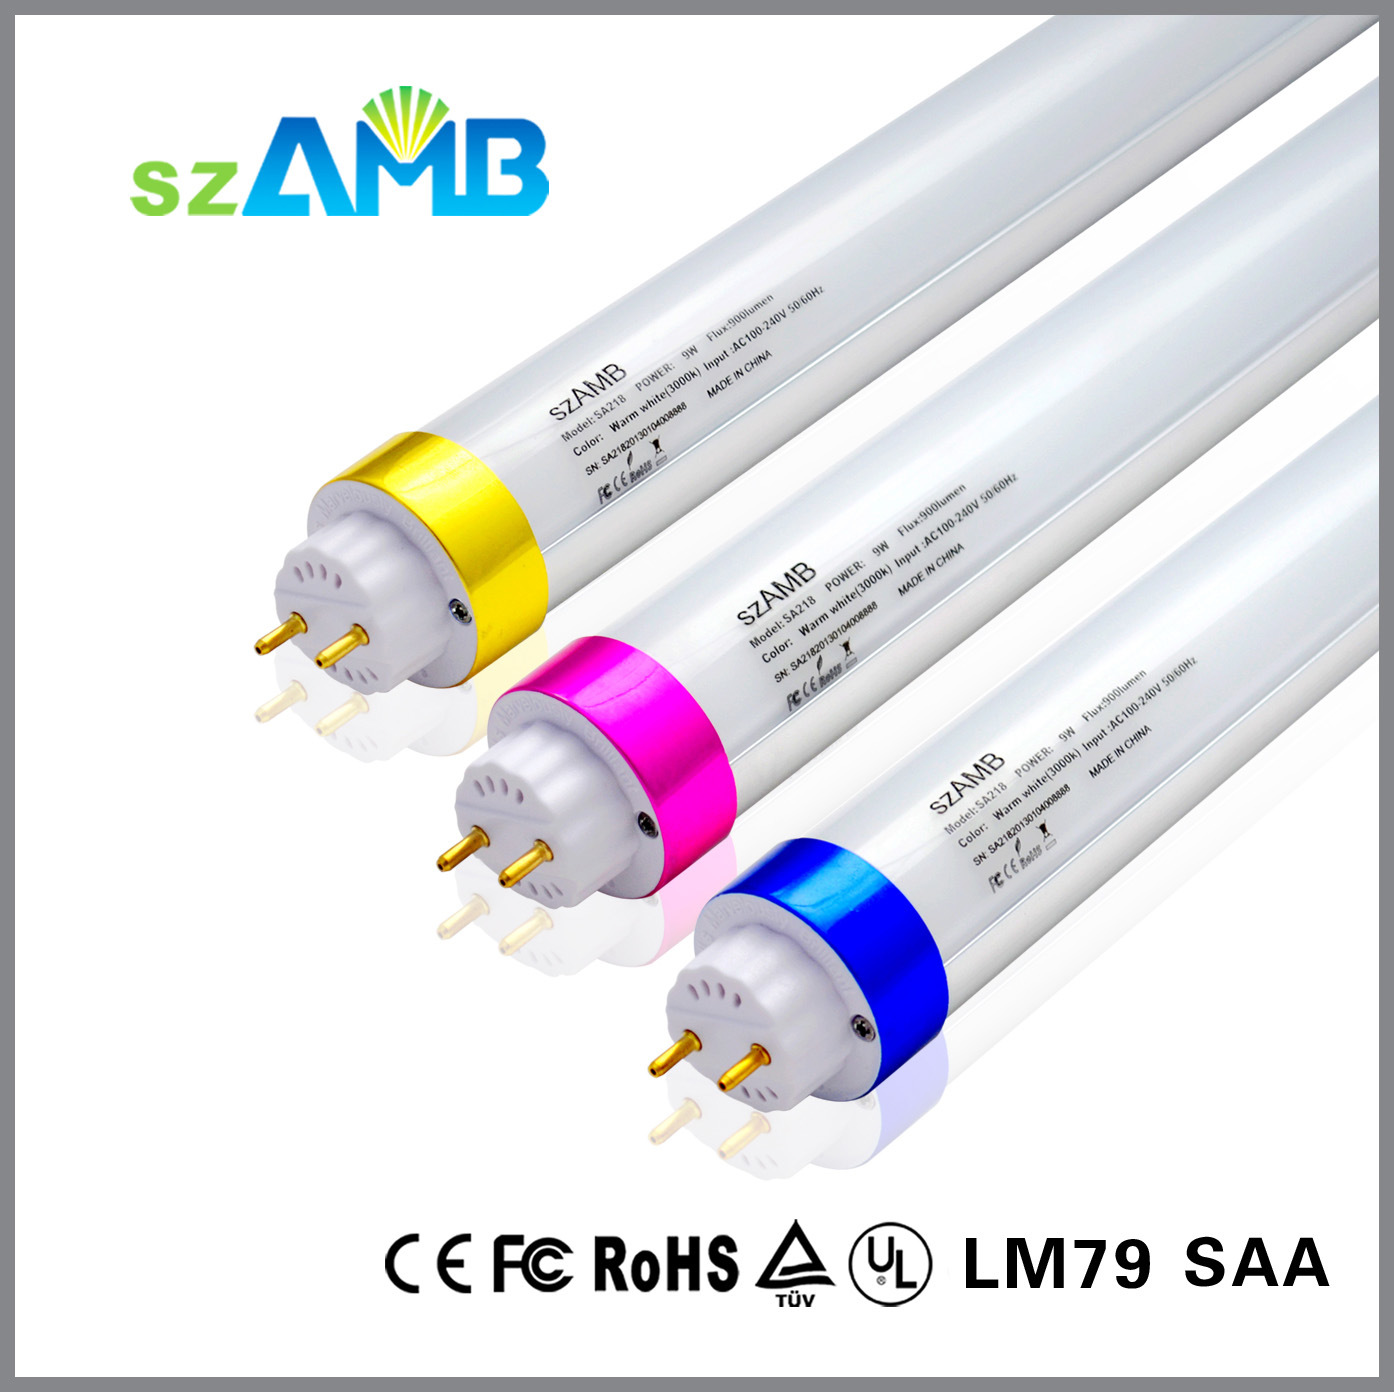 T10 LED Tube Light, T10 LED Tube (3years Warrranty)